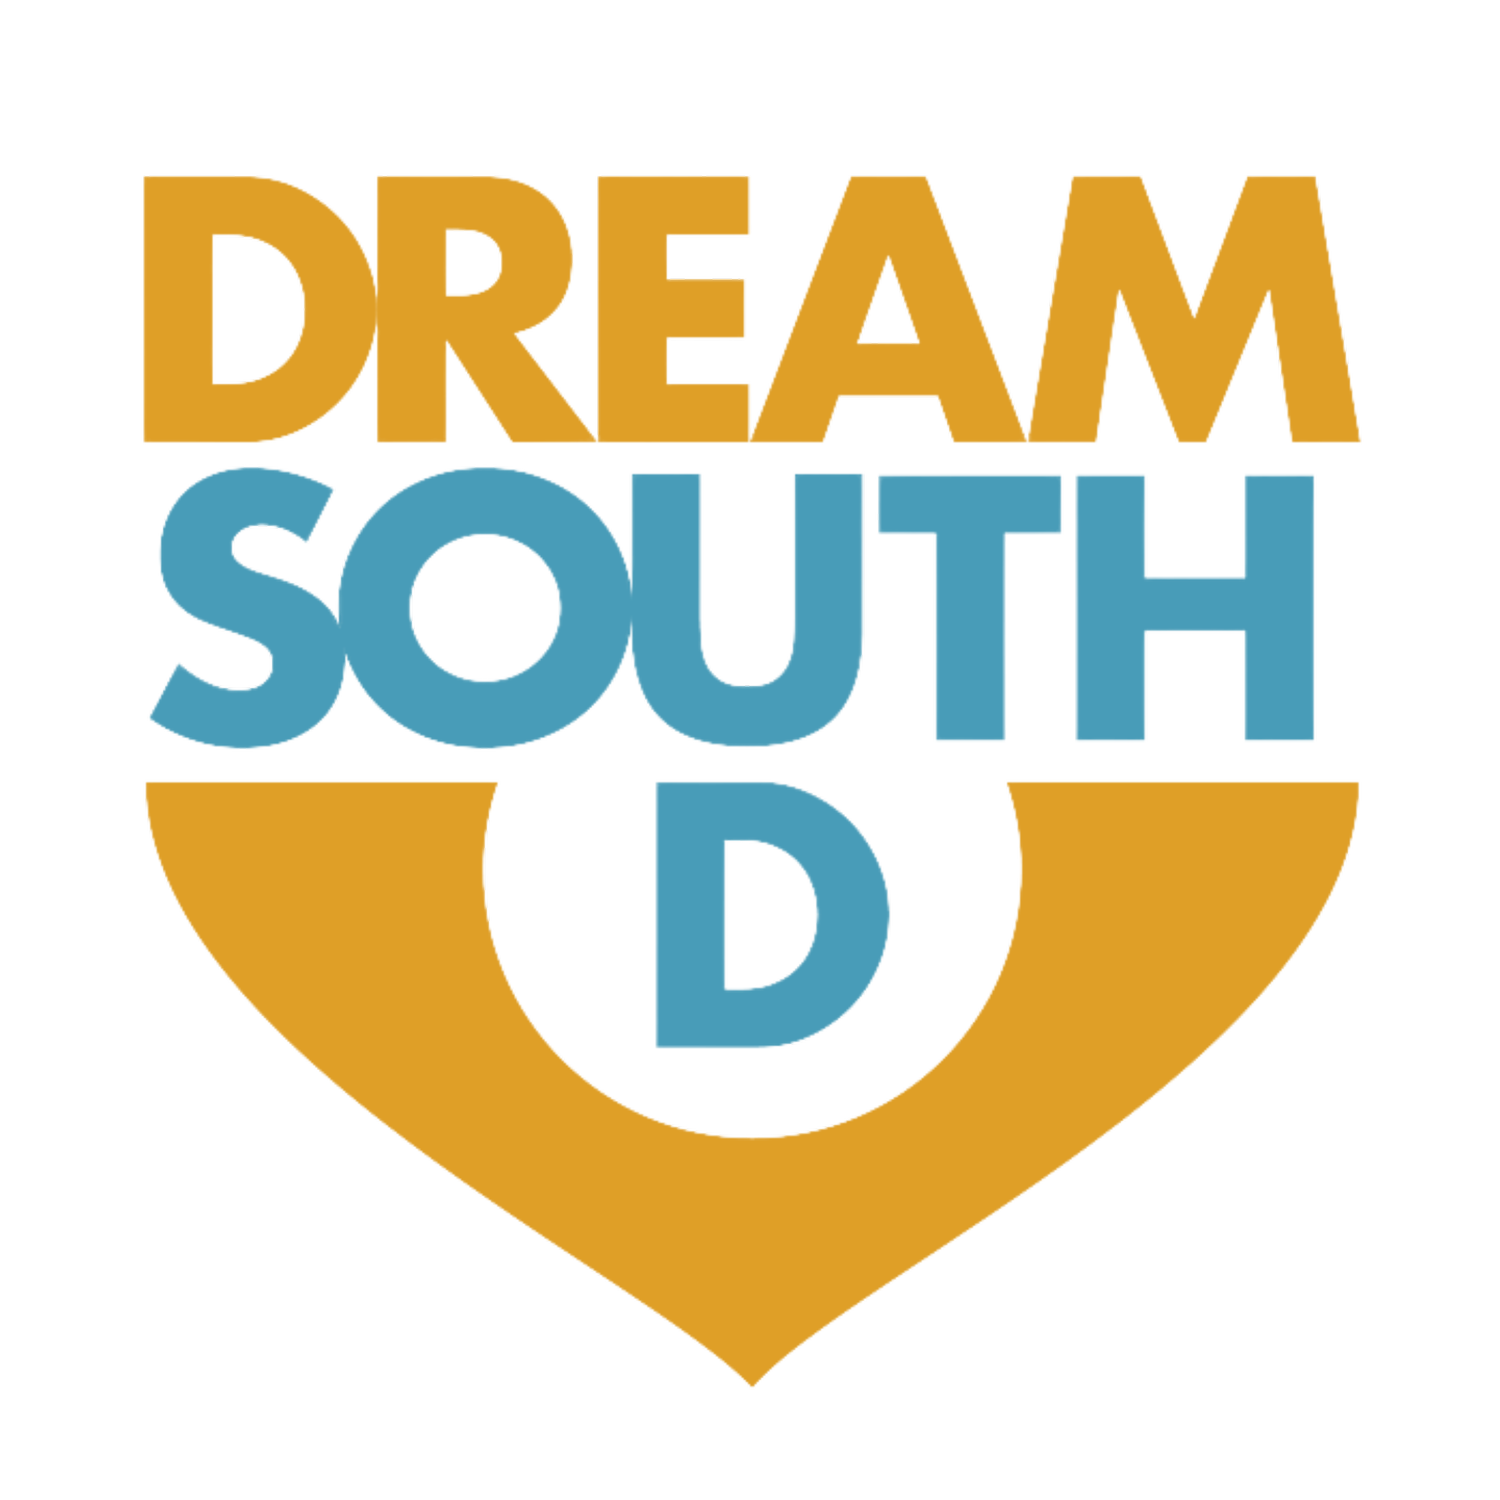 Dream South D